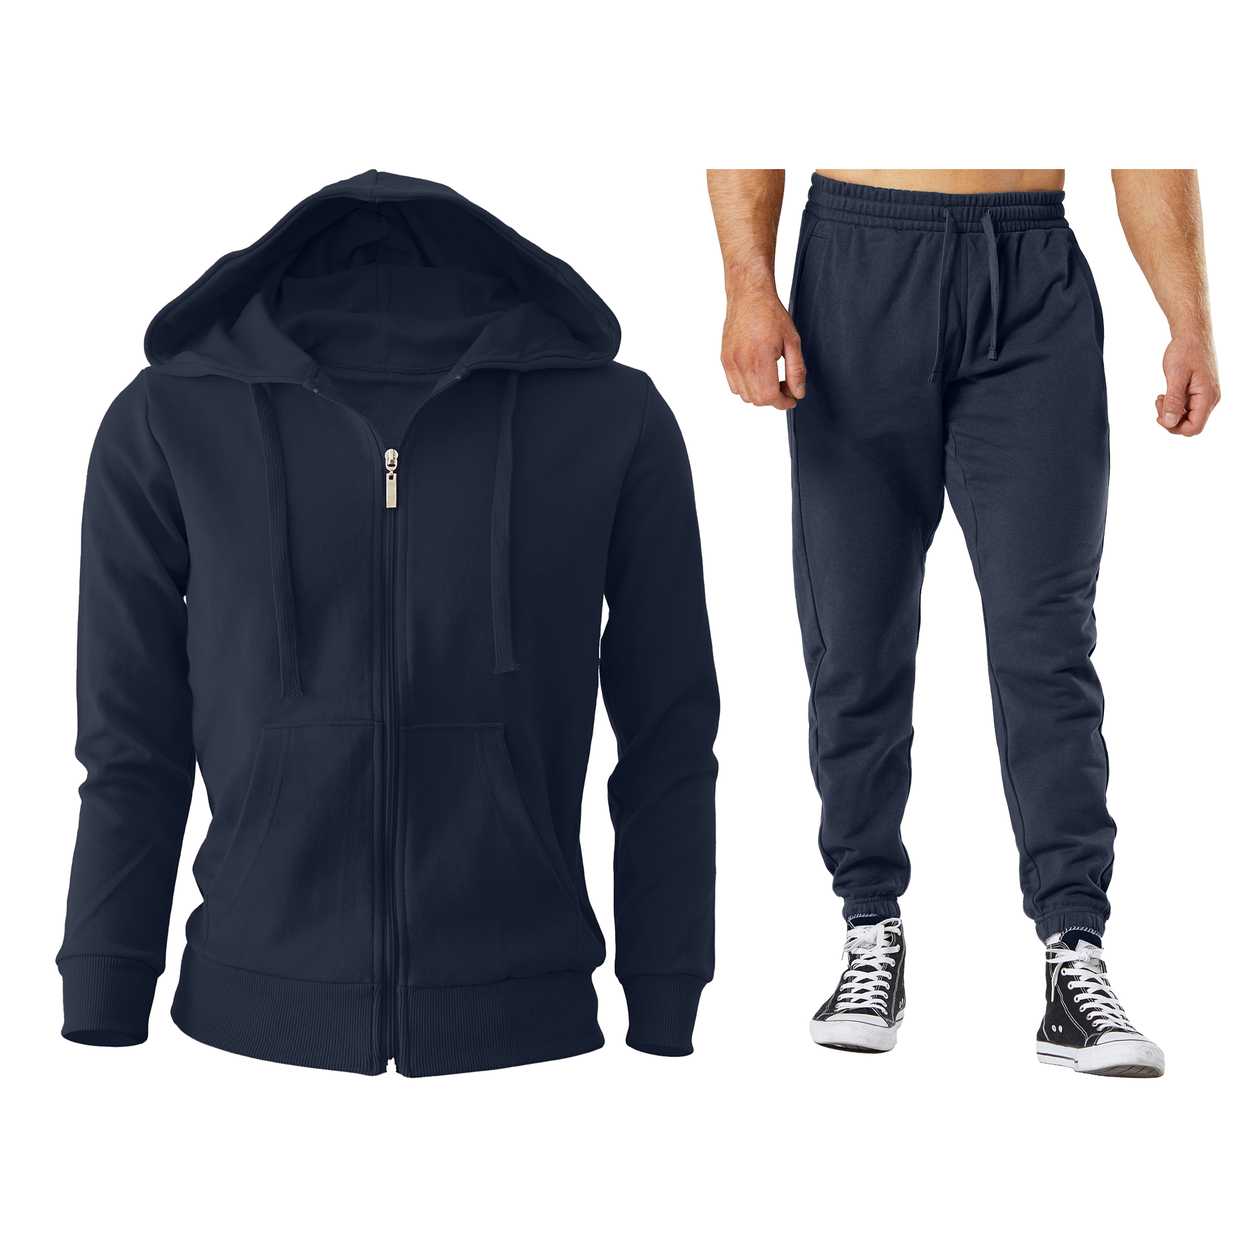 2-Piece: Men's Winter Warm Cozy Athletic Multi-Pockets BIG & TALL Sweatsuit Set - Black, Medium